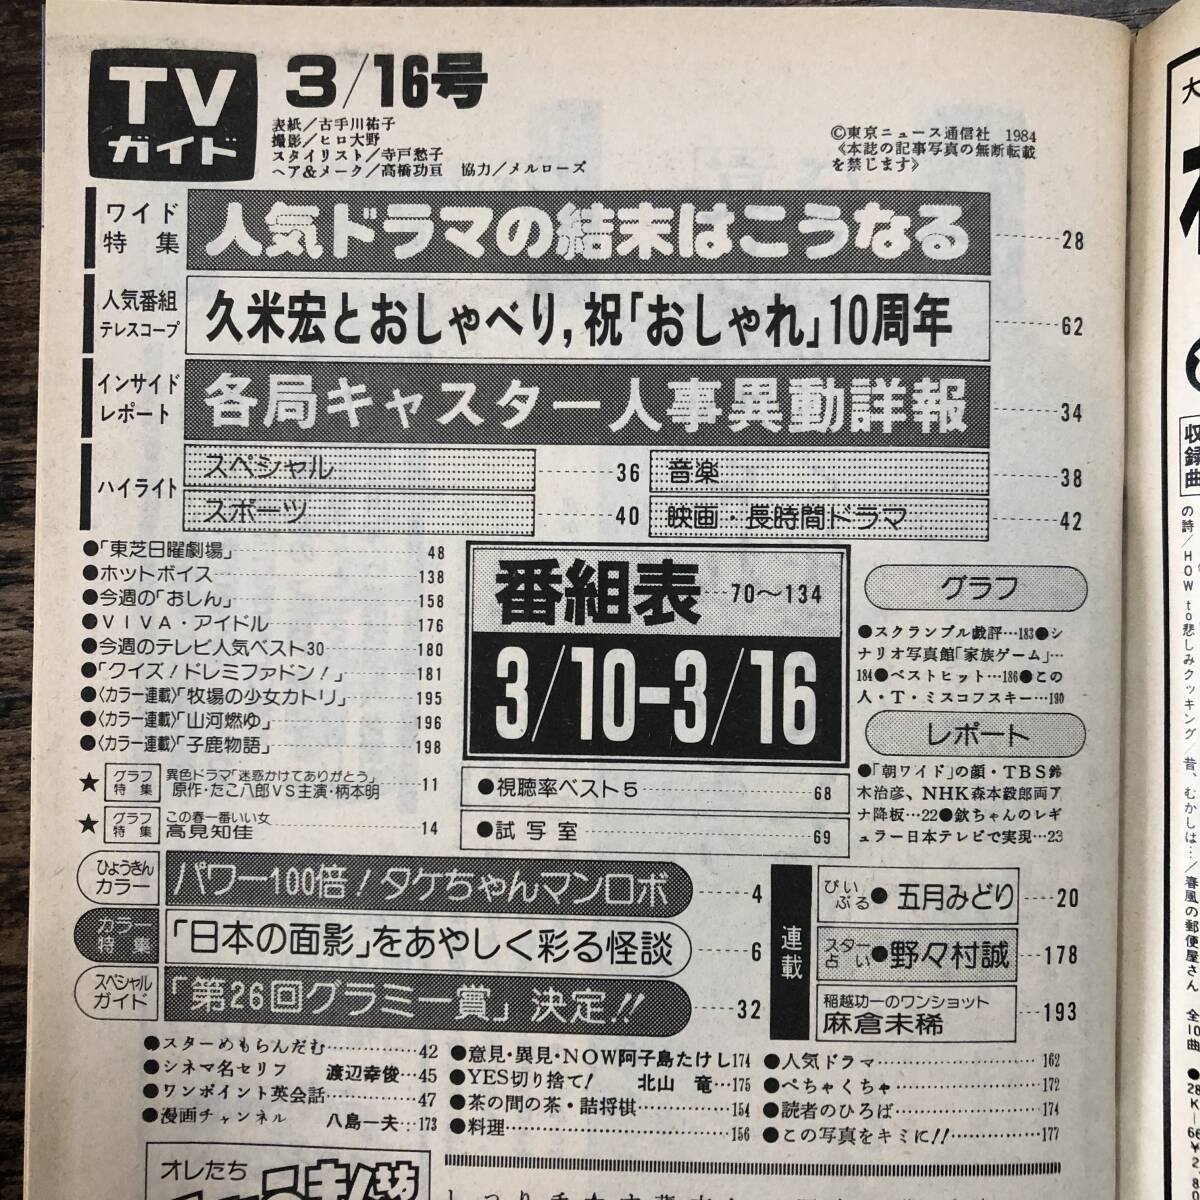 K-3326■週刊TVガイド 1984年3月16日■テレビ番組表■東京ニュース通信社_画像4